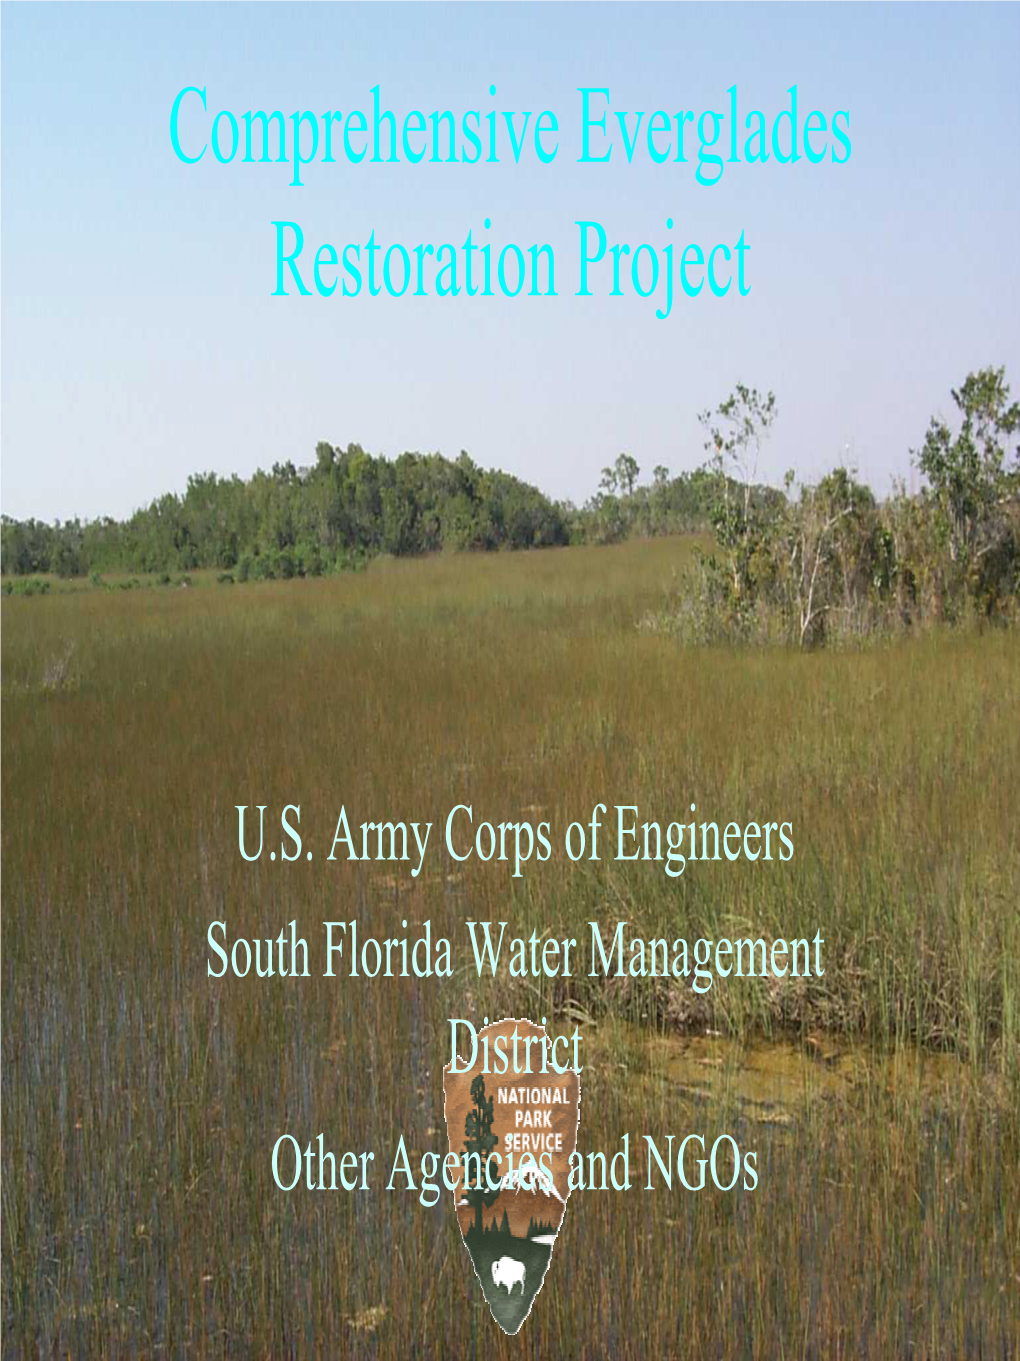 The Comprehensive Everglades Restoration Plan